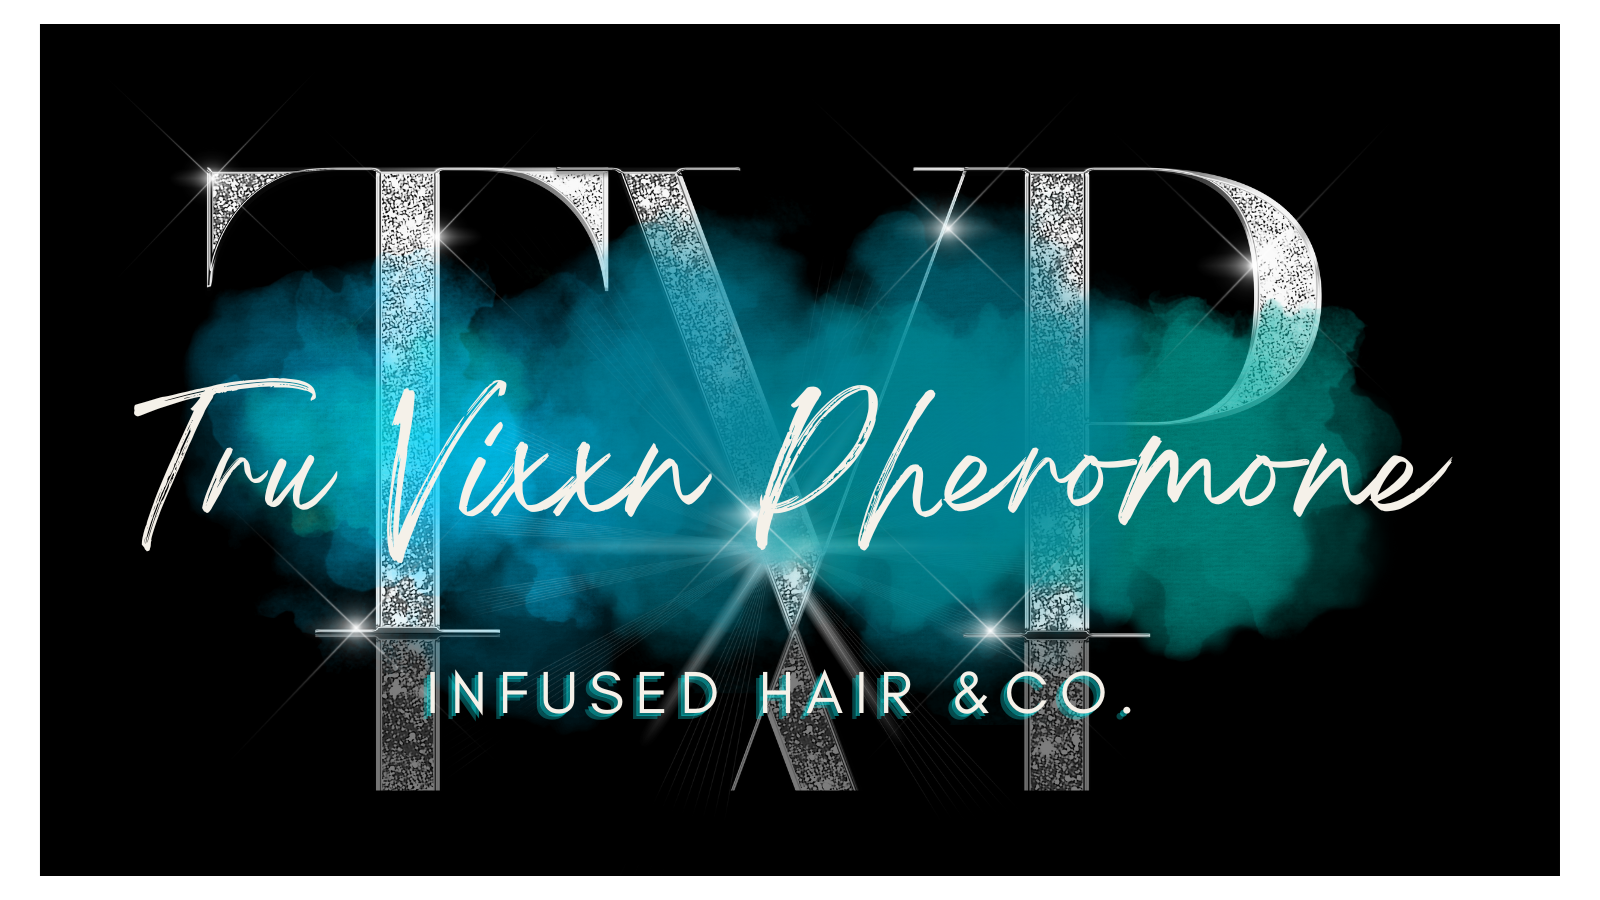 Tru Vixxn Pheromone Infused Hair & Co.